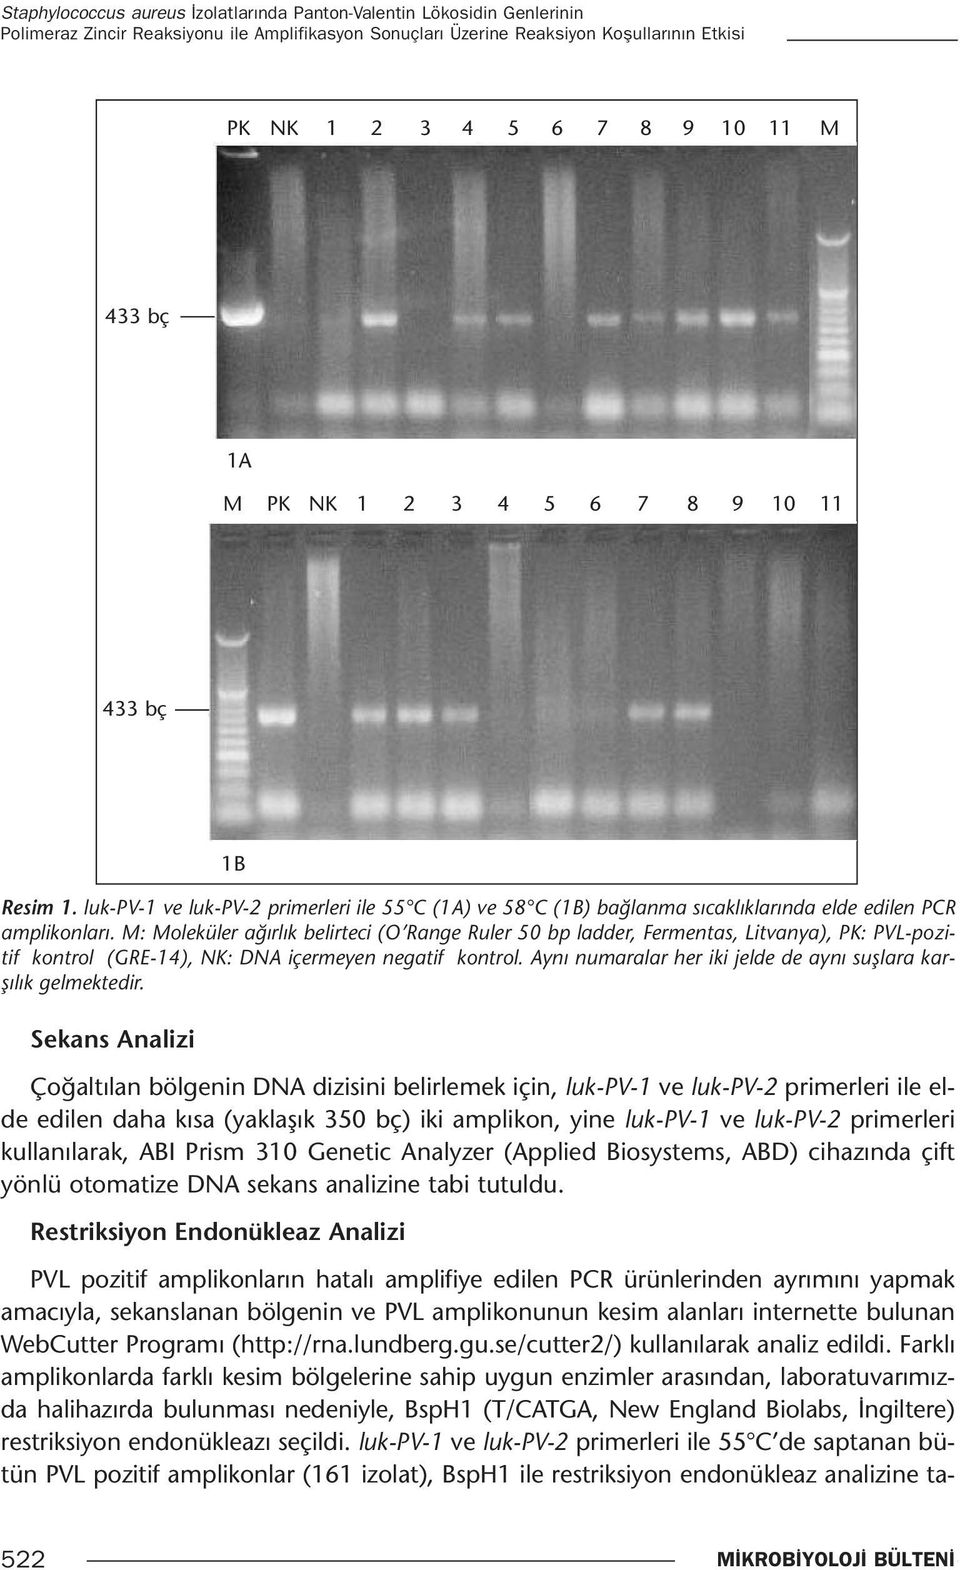 M: Moleküler ağırlık belirteci (O Range Ruler 50 bp ladder, Fermentas, Litvanya), PK: PVL-pozitif kontrol (GRE-14), NK: DNA içermeyen negatif kontrol.